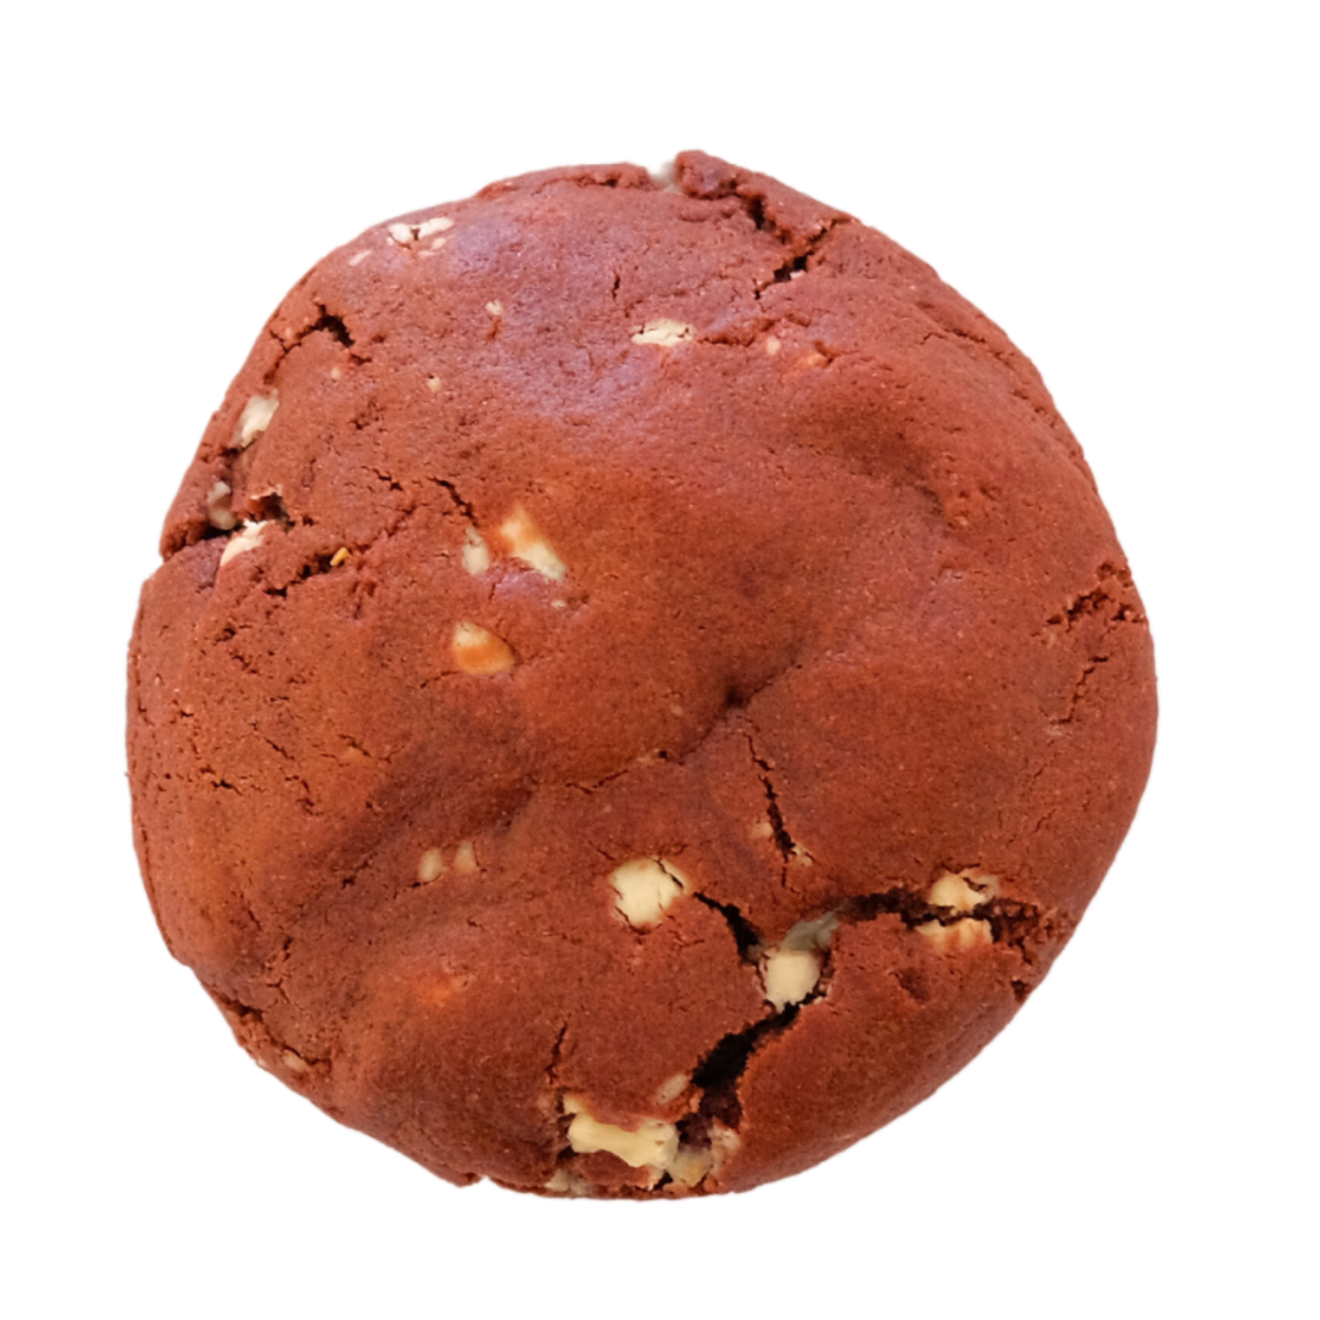 Red Velvet White Chocolate Cookie